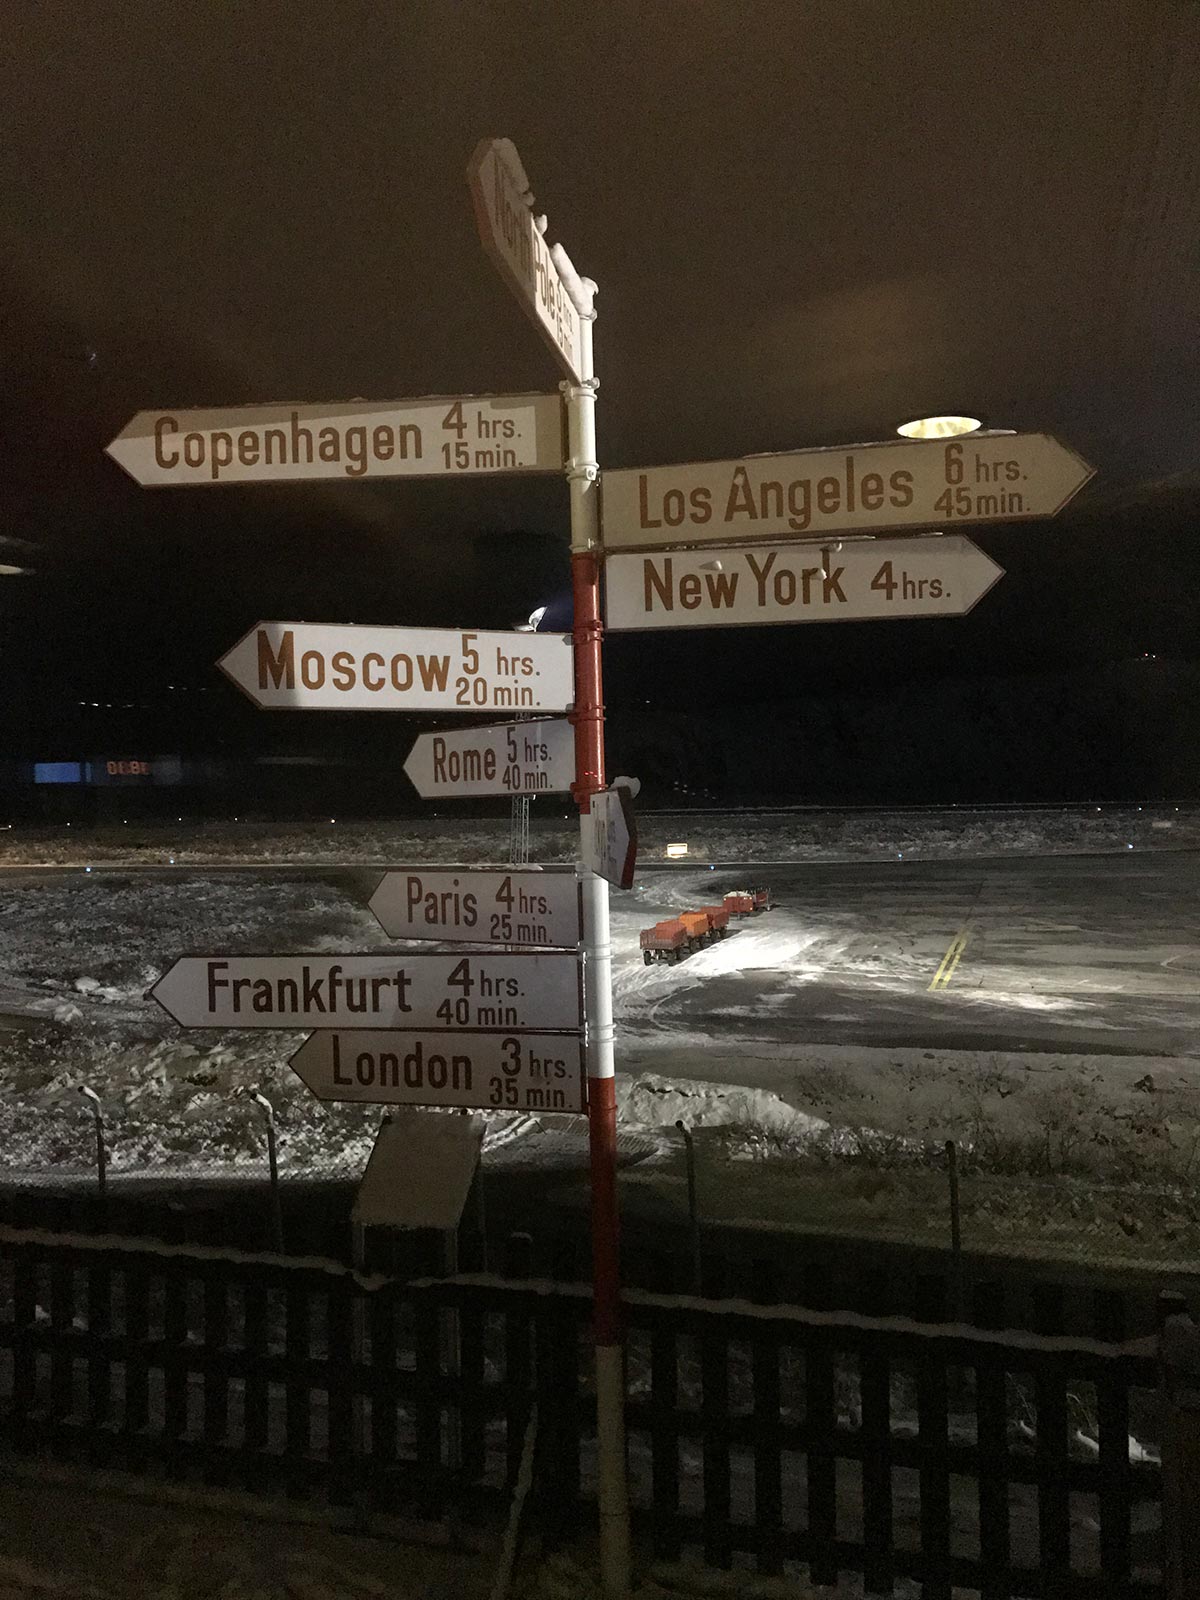 World's cities direction sign in Kangerlussauq, Greenland. Emergency landing in Greenland